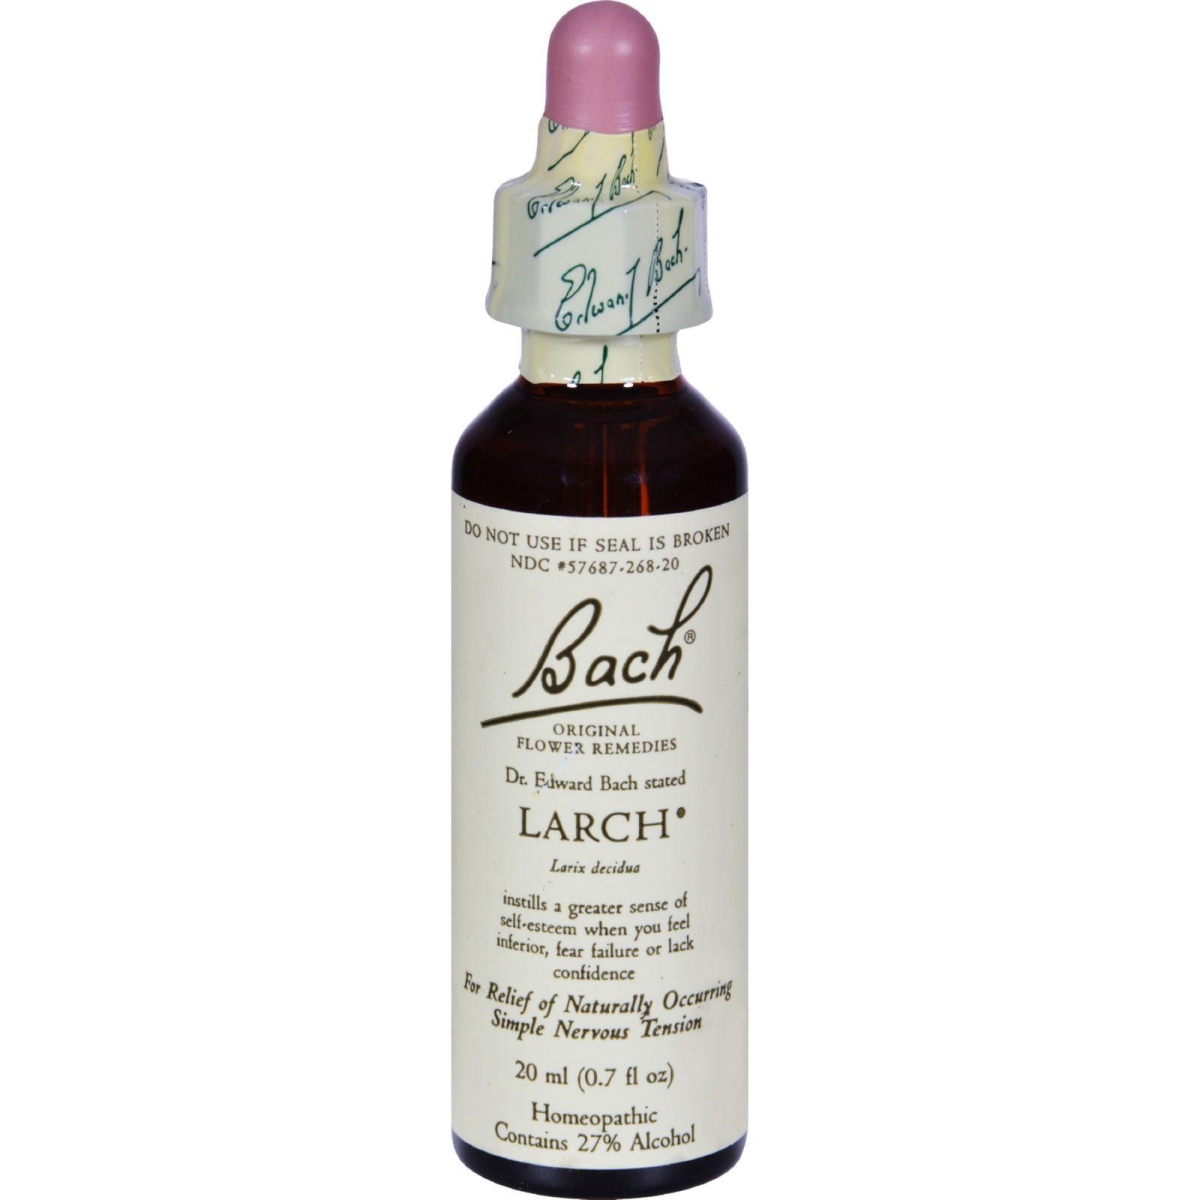 Hg0233676 0.7 Fl Oz Flower Remedies Essence, Larch